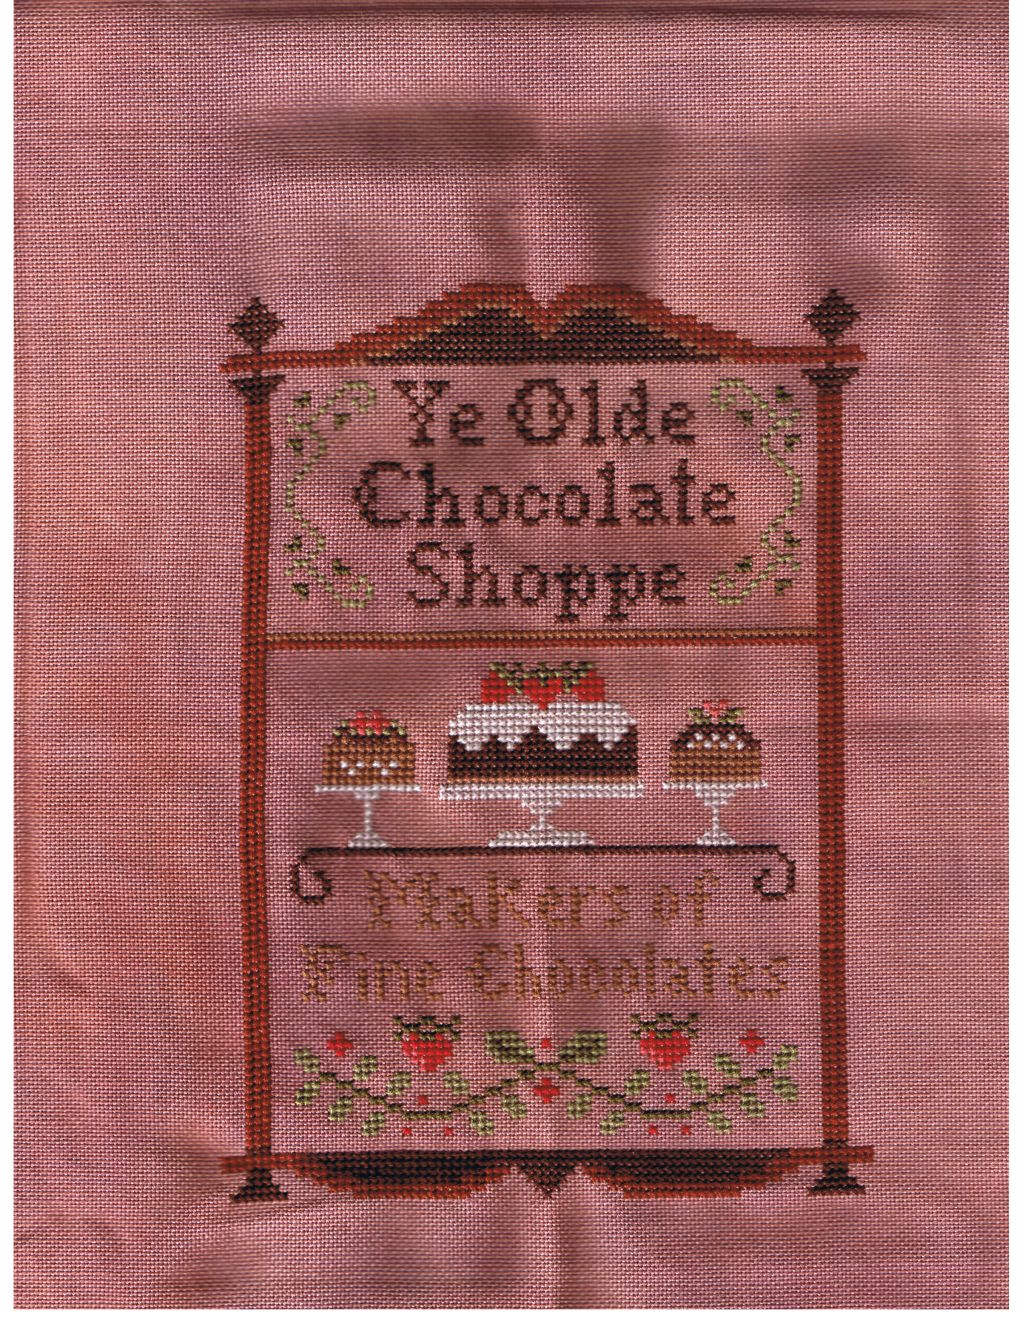 [Chocolate+Shoppe-March+21st.jpg]